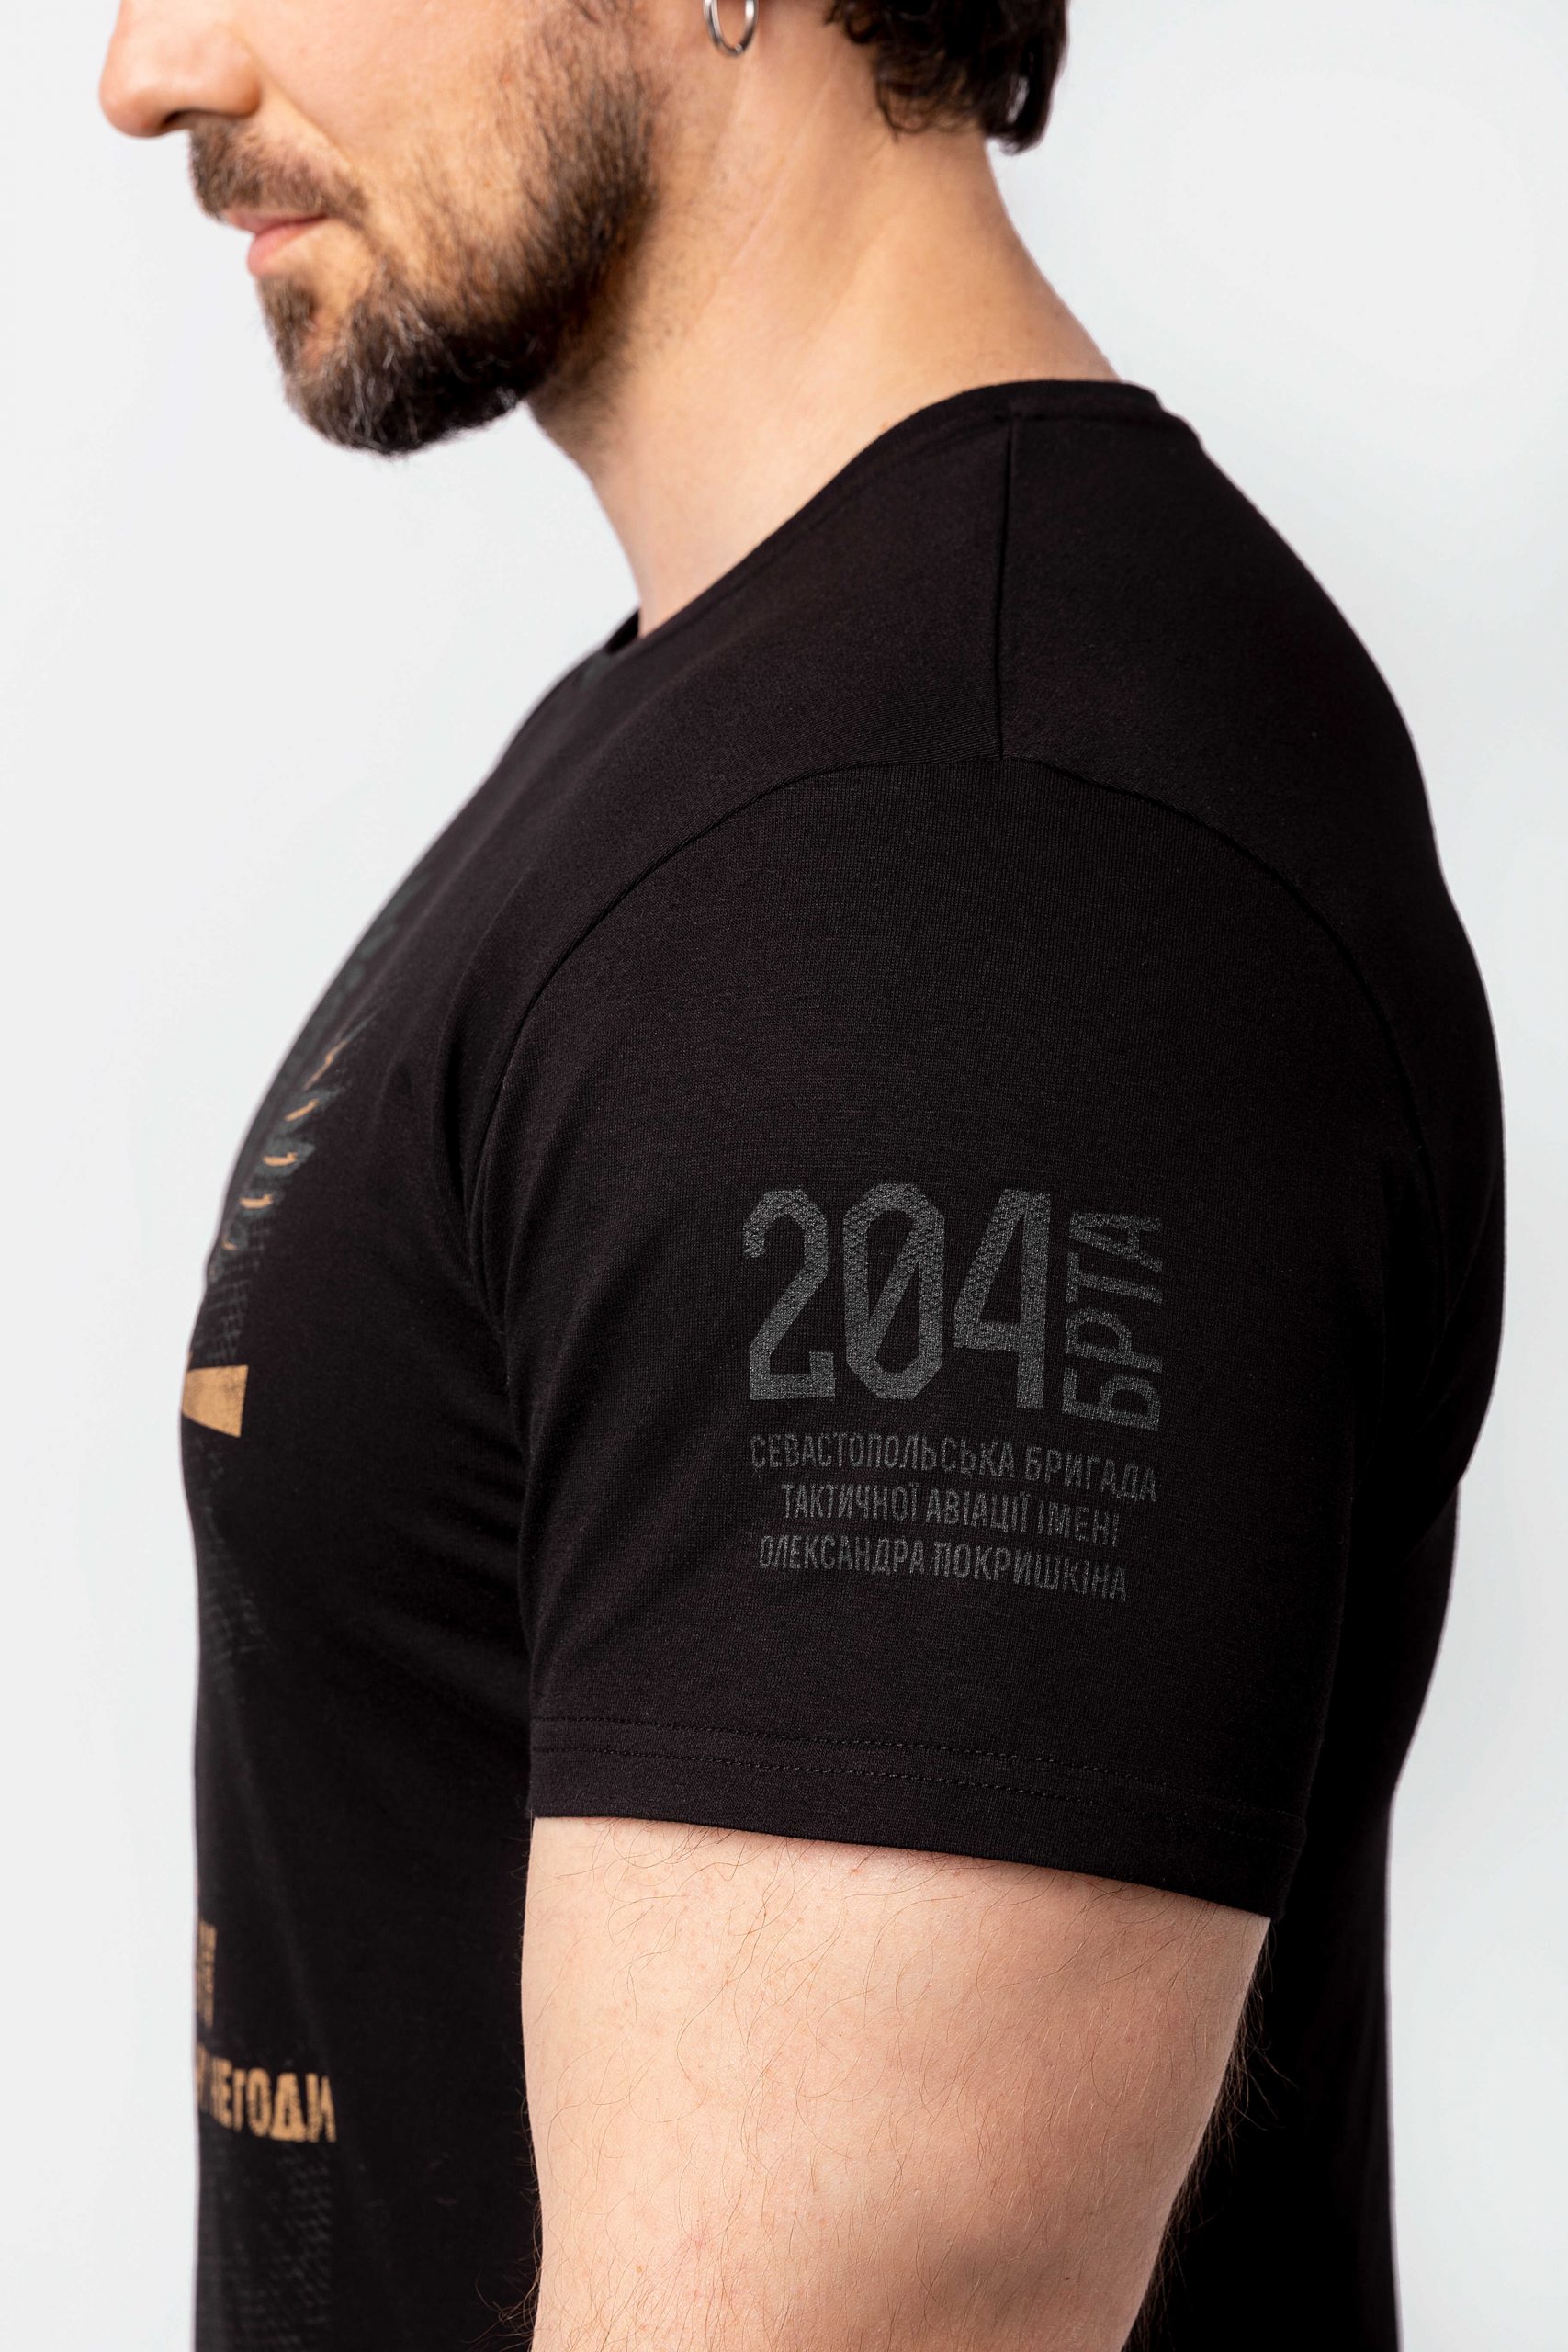 Men's T-Shirt Griffon. Color black. 
Height of the model: 182 cm.